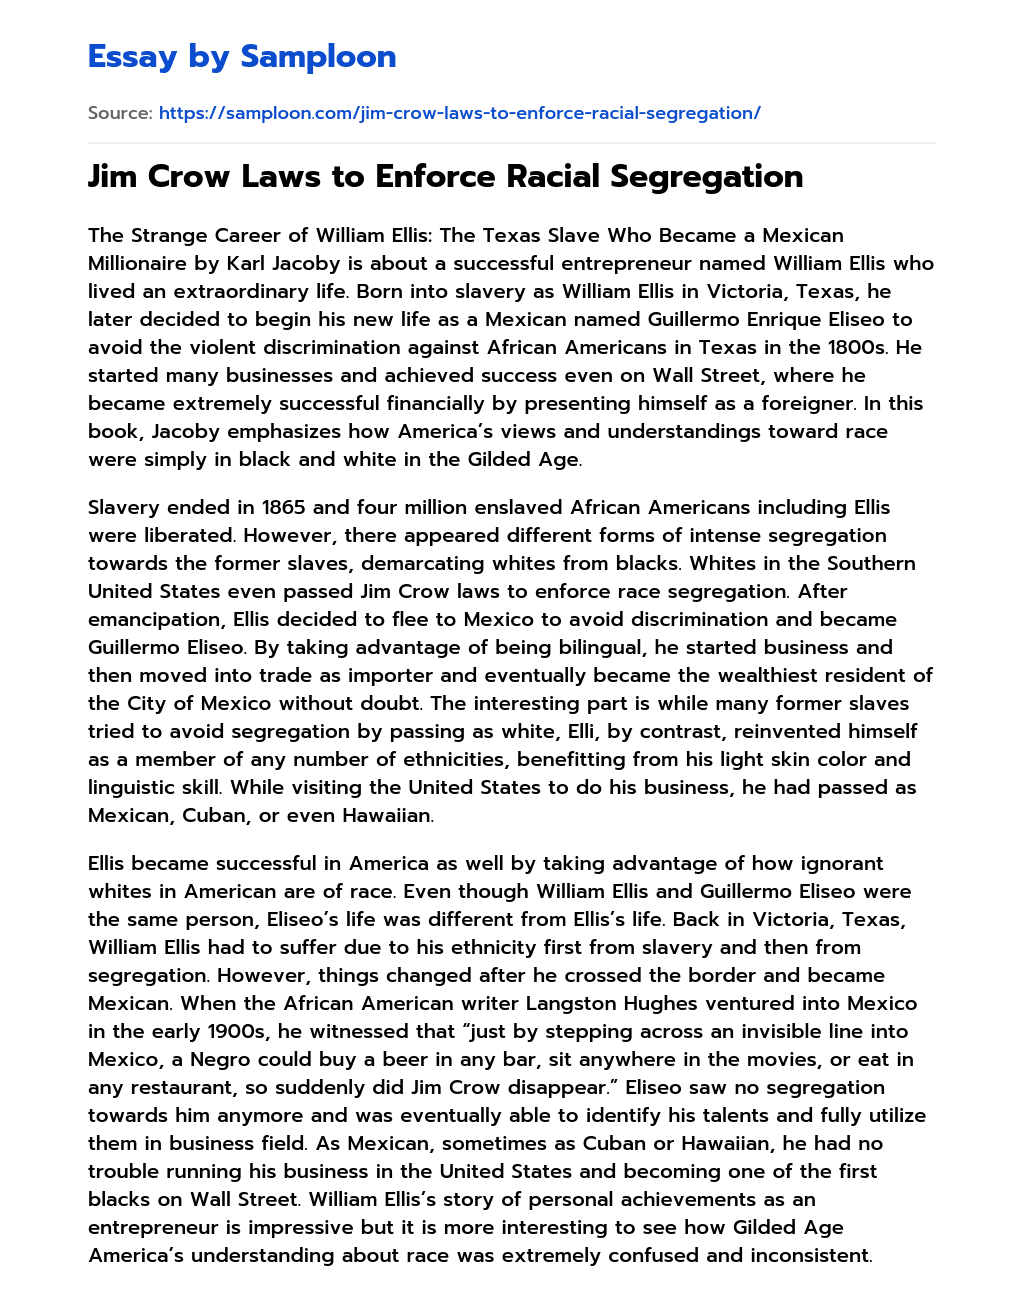 Jim Crow Laws to Enforce Racial Segregation essay